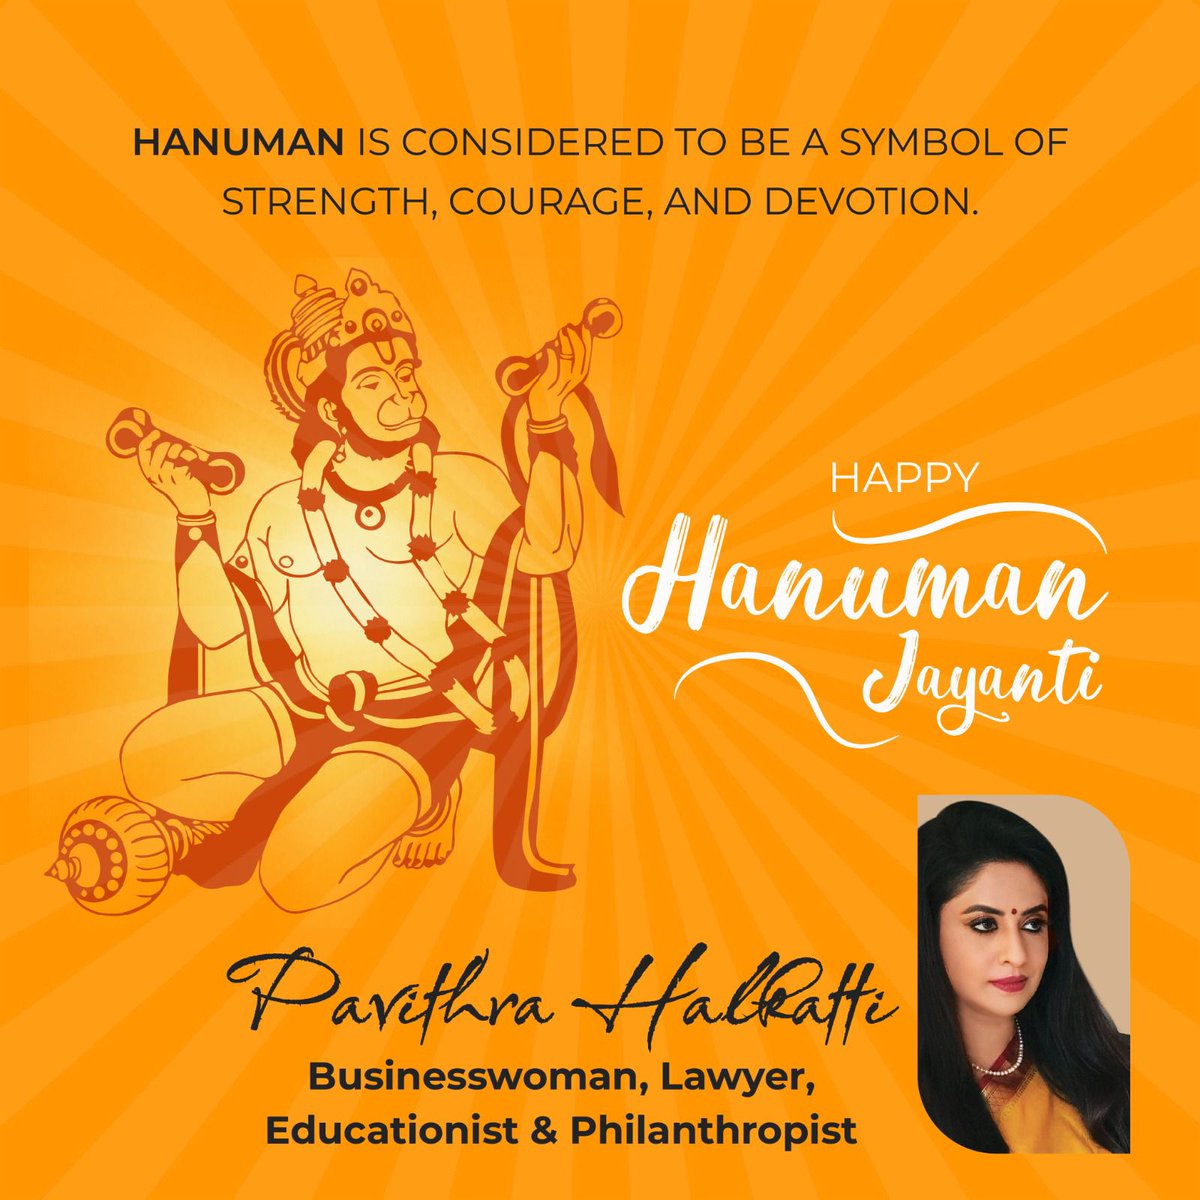 Wishing you and your family a very happy Hanuman Jayanti. May Lord Hanuman's blessings be with you always. Jai Shri Ram!  #HanumanJayanthi #Hanuman #LordHanuman #Ramayana #JaiHanuman  #HanumanChalisa #LordRama #Rama #Celebration #Festival #IndianFestival #IndianCulture #God…